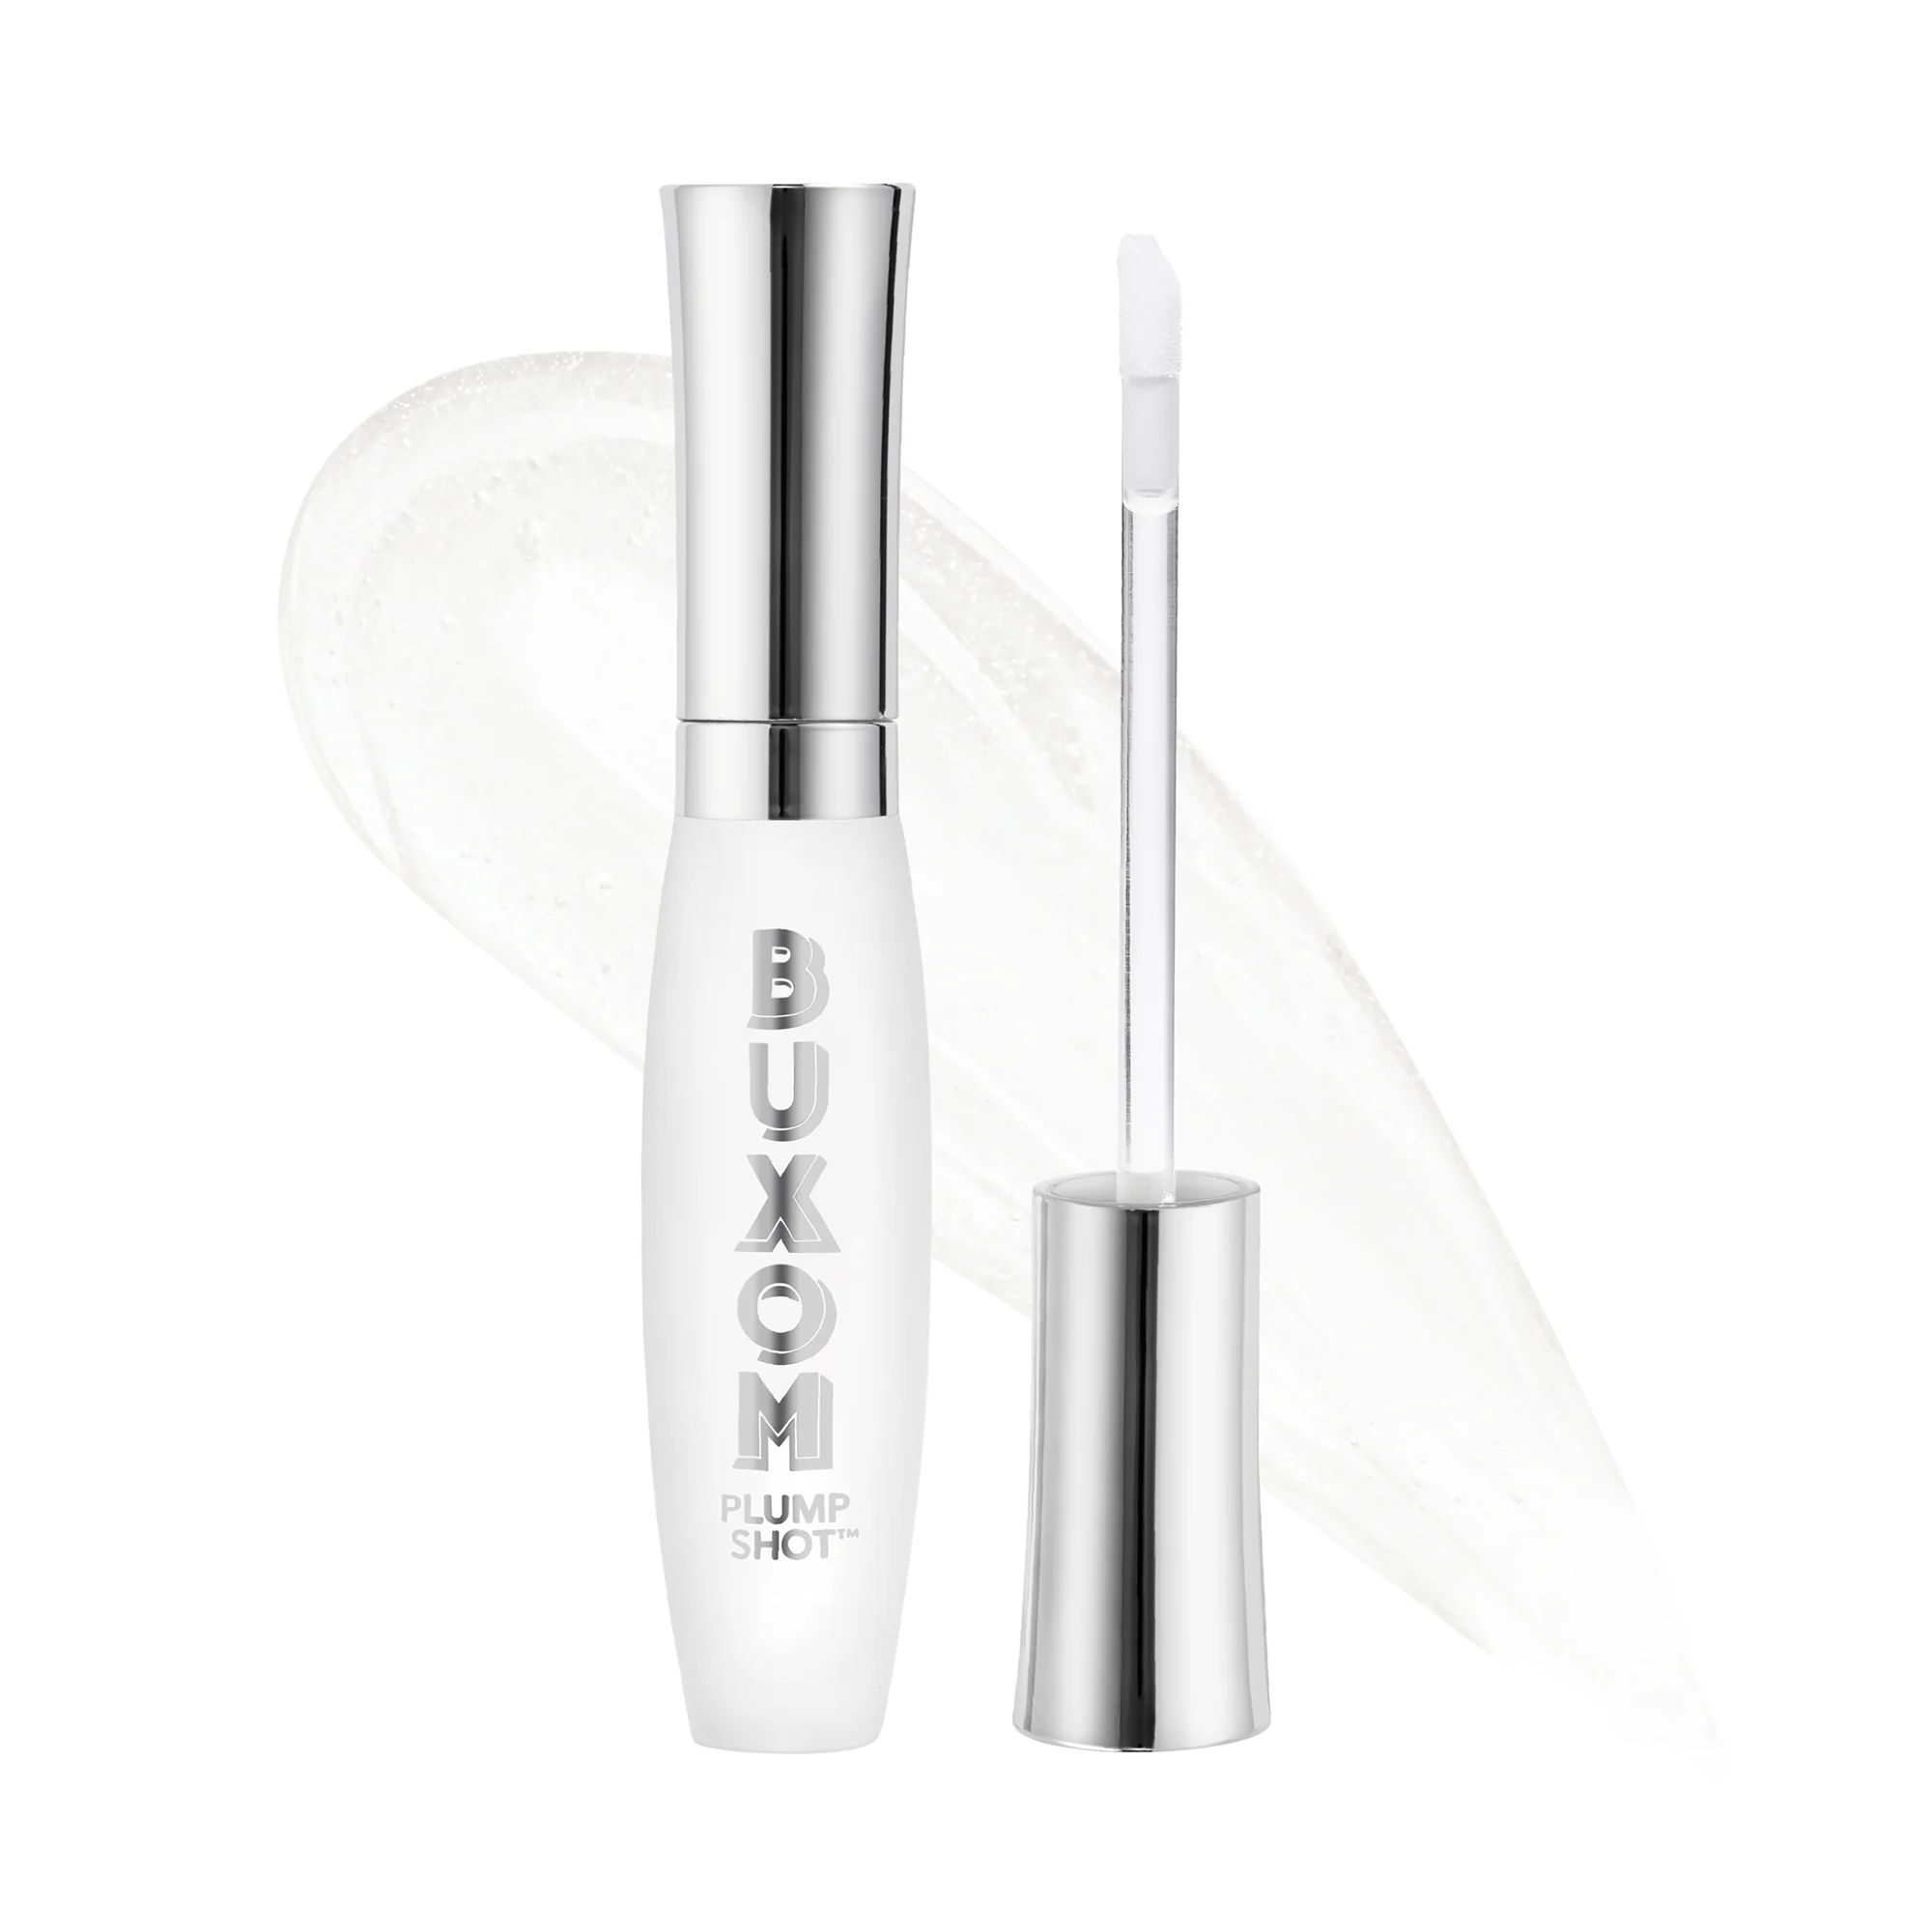 Plump Shot™ Lip Serum | BUXOM Cosmetics